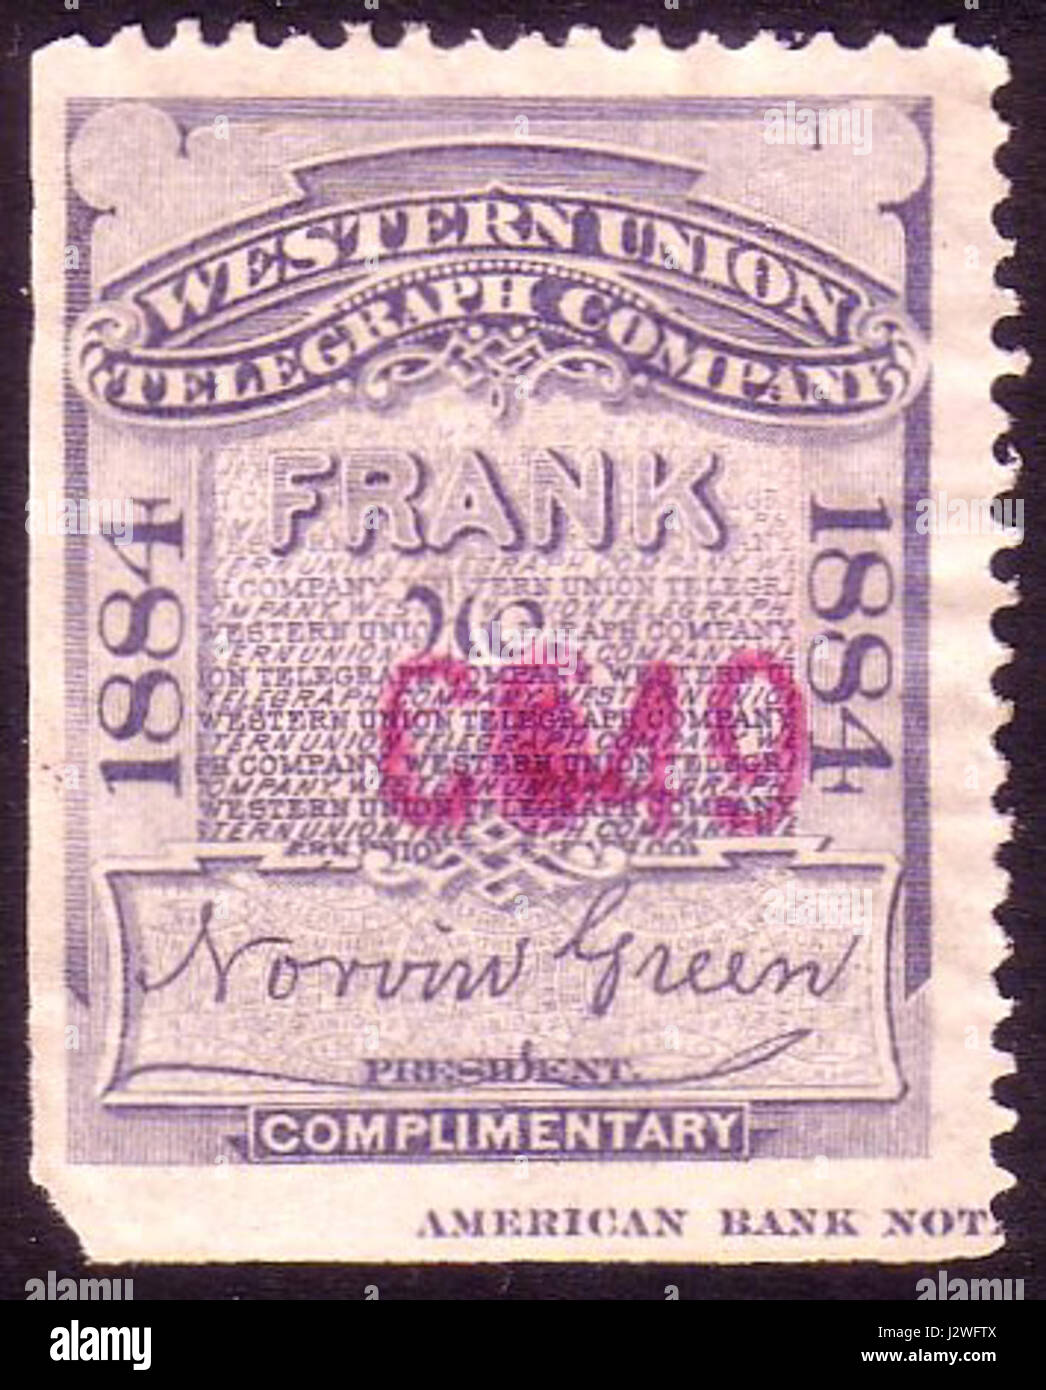 WESTERN UNION TELEGRAPH Co, JACKSONVILLE, FL 1928 Postal Cover w